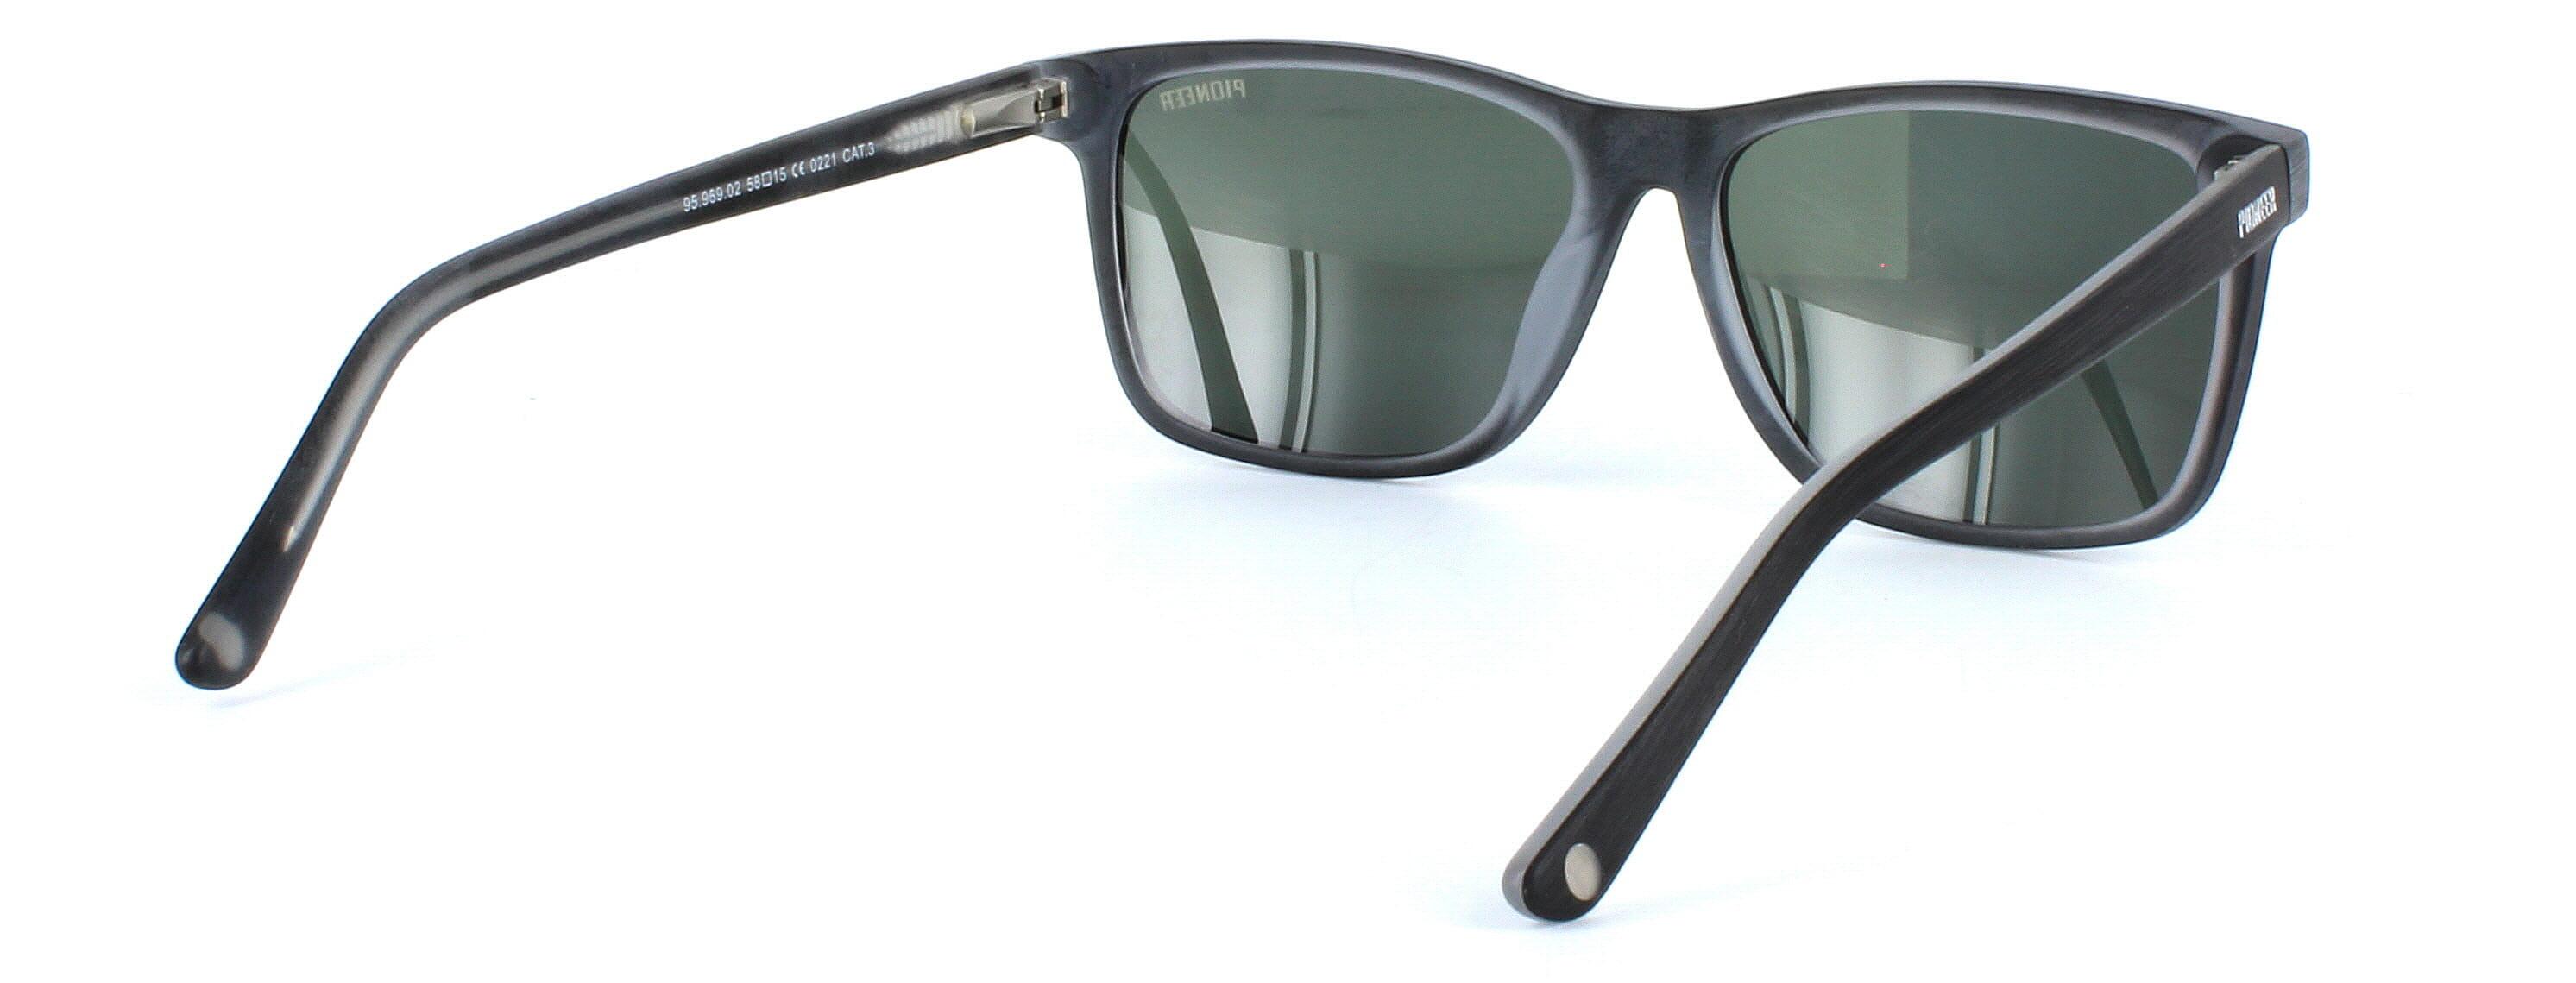 Angelo - unisex plastic sunglasses here in matt brown - image view 4